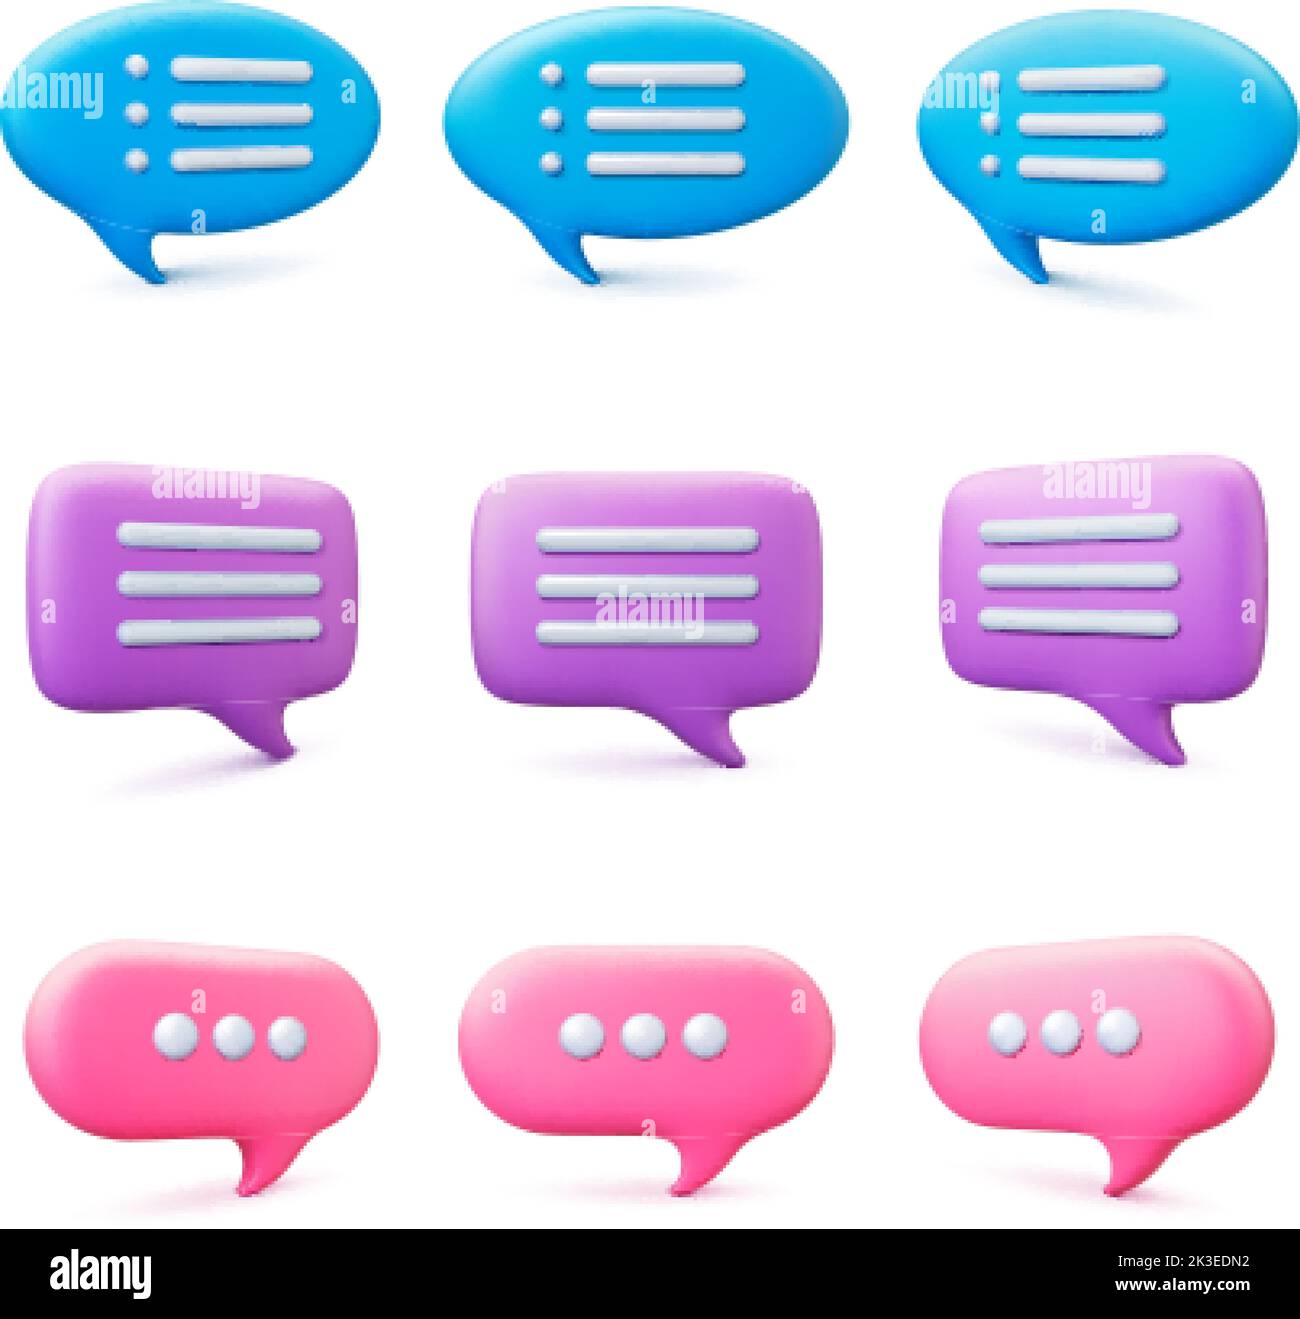 Diseño de burbujas de conversación en 3D. Burbuja de mensaje, diferentes globos de texto para comentarios, texto o comentario. Nubes aisladas bot chat vector conjunto de c Ilustración del Vector